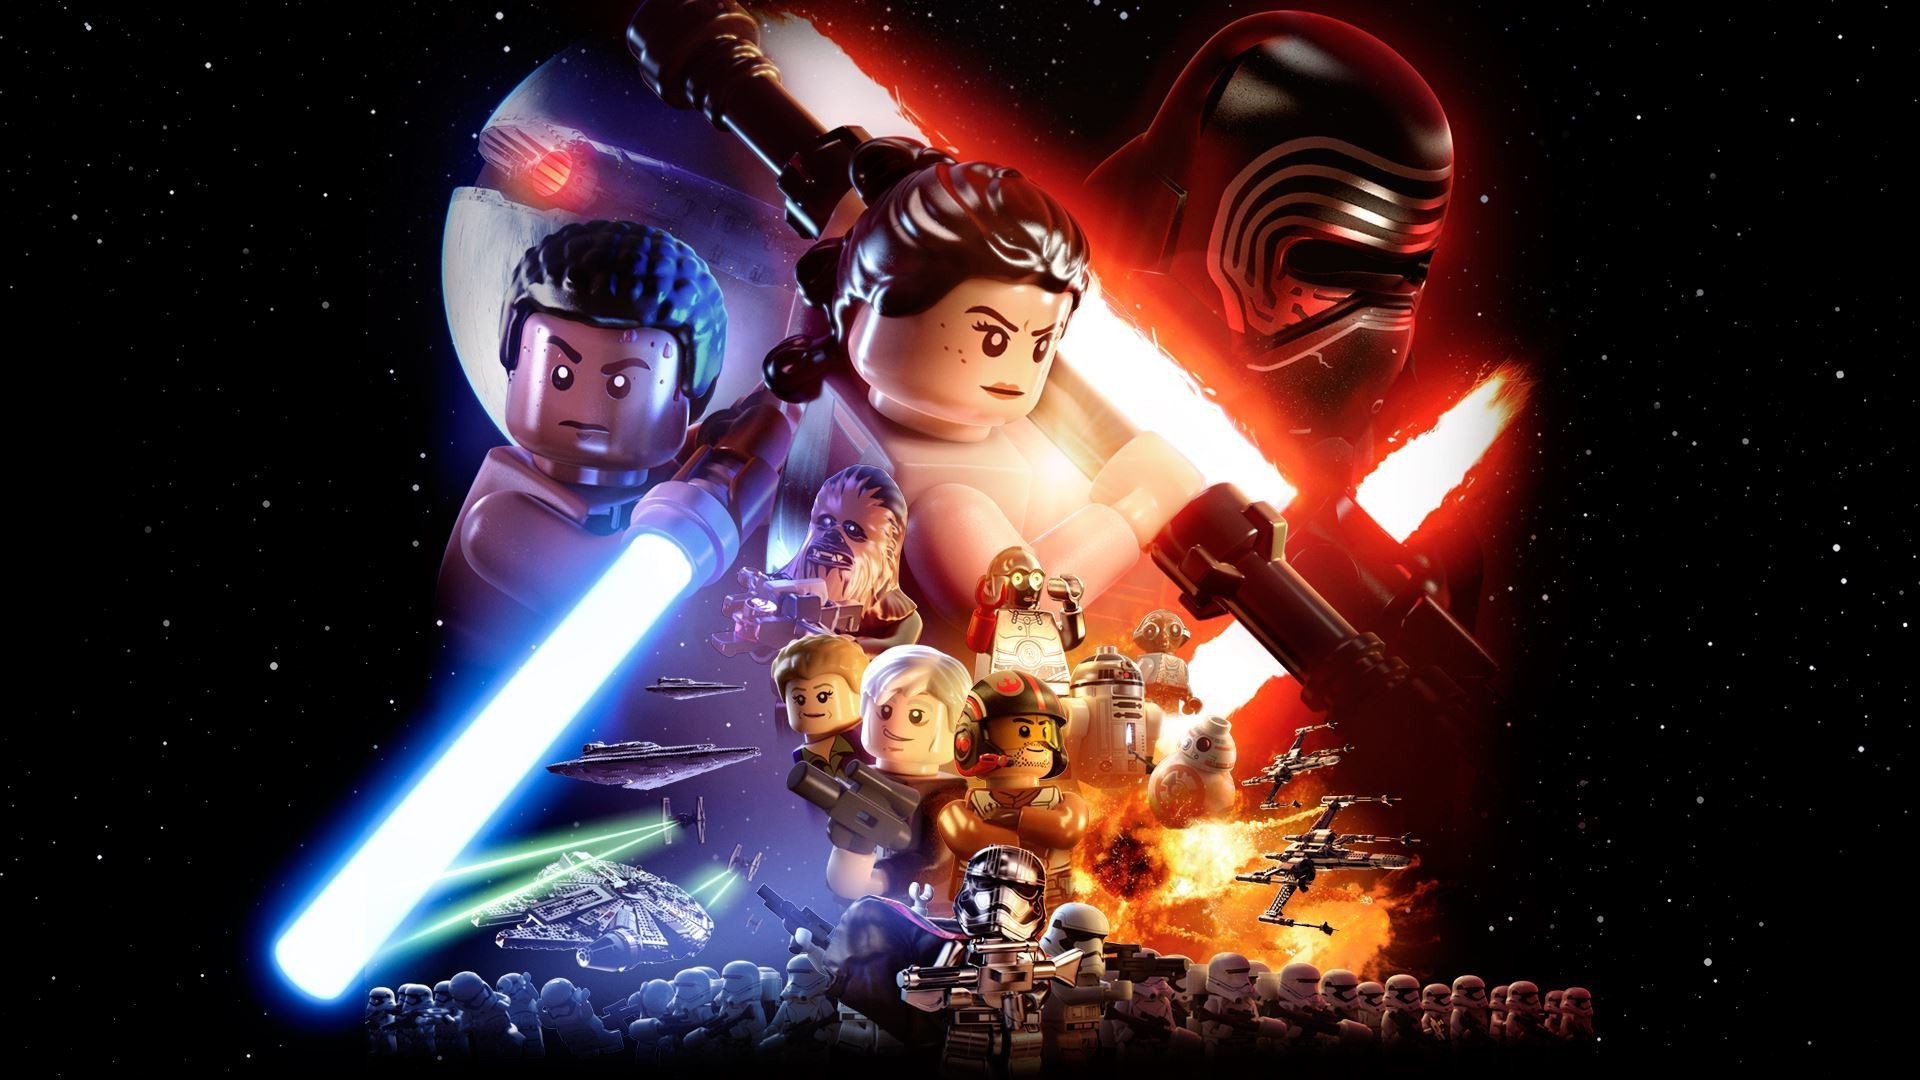 1: Lego Star Wars: The Force Awakens